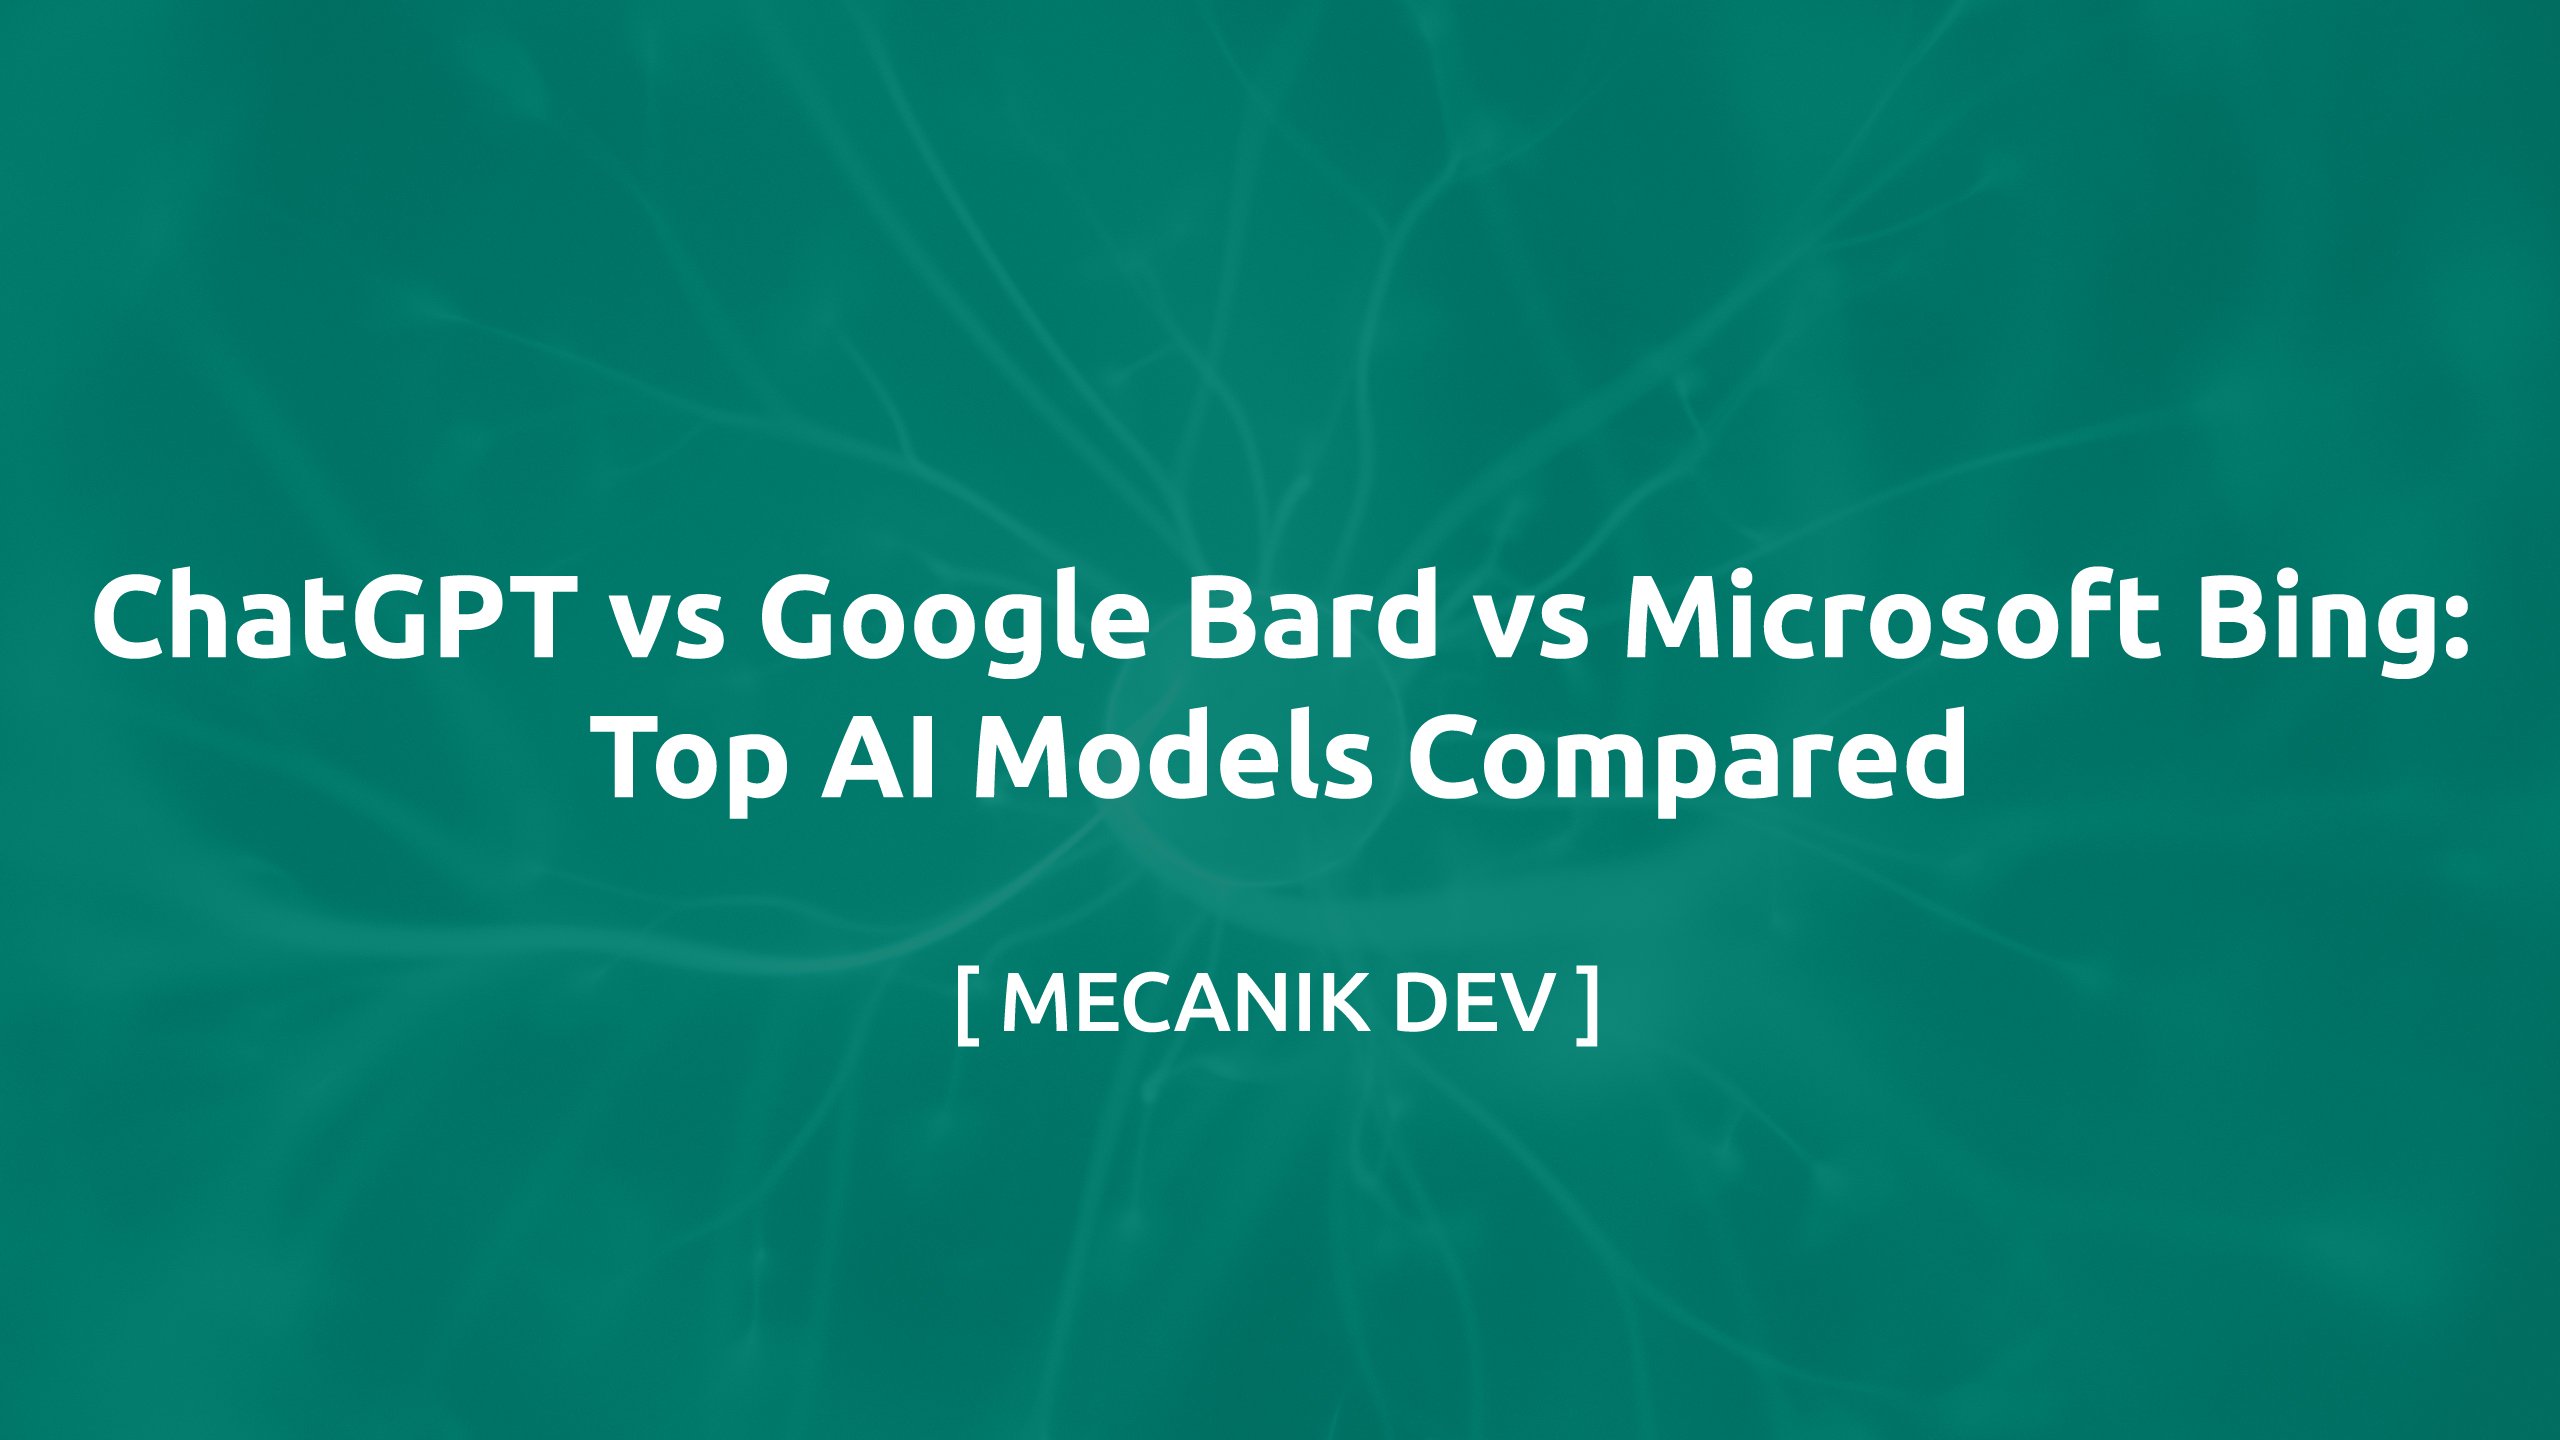 ChatGPT vs Google Bard vs Microsoft Bing: Top AI Models Compared